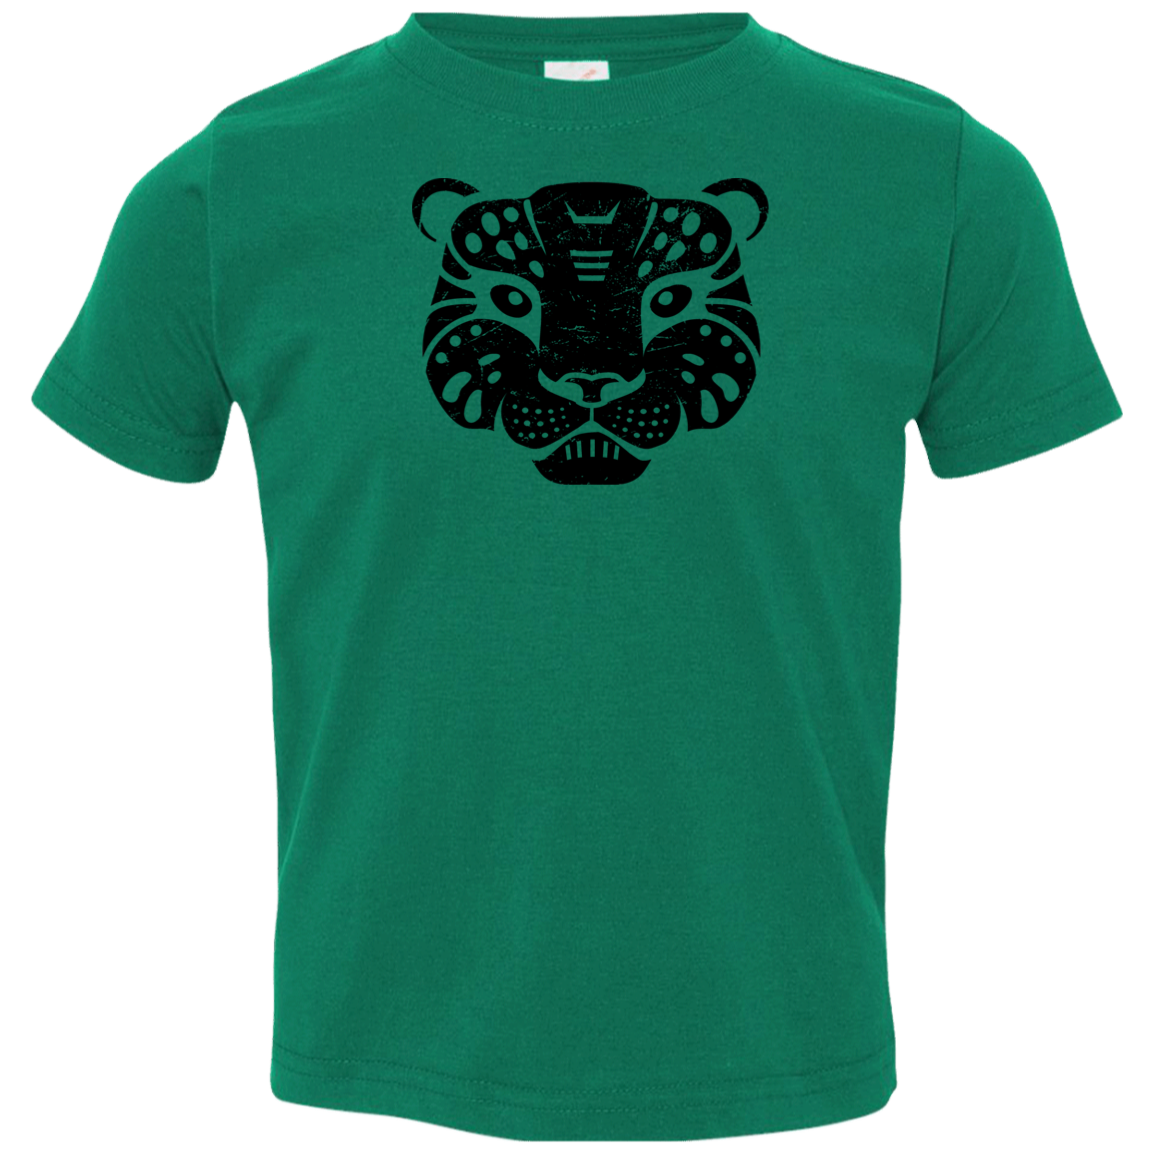 Black Distressed Emblem T-Shirt for Toddlers (Snow Leopard/Denali)